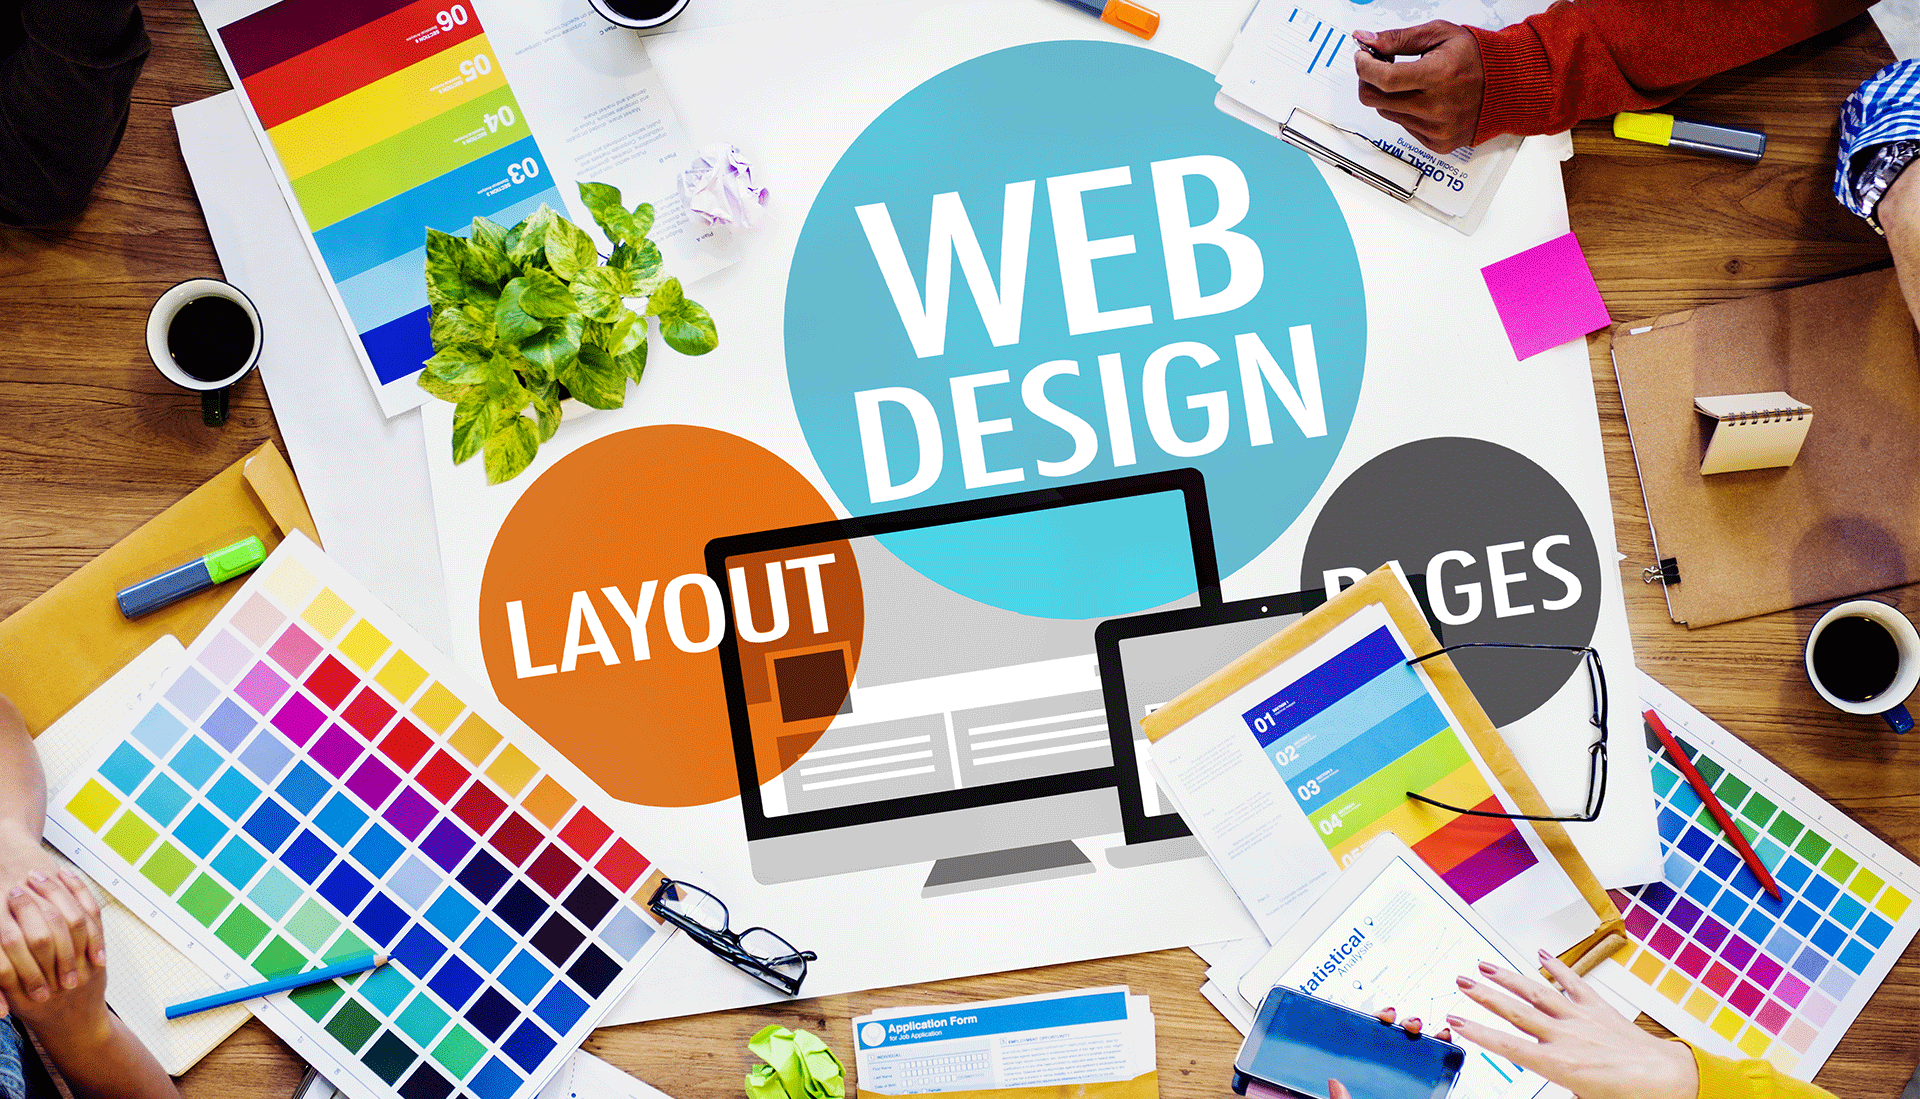 Web design is. Веб дизайн. Веб дизайнер. Дизайн сайта. Web дизайнер.